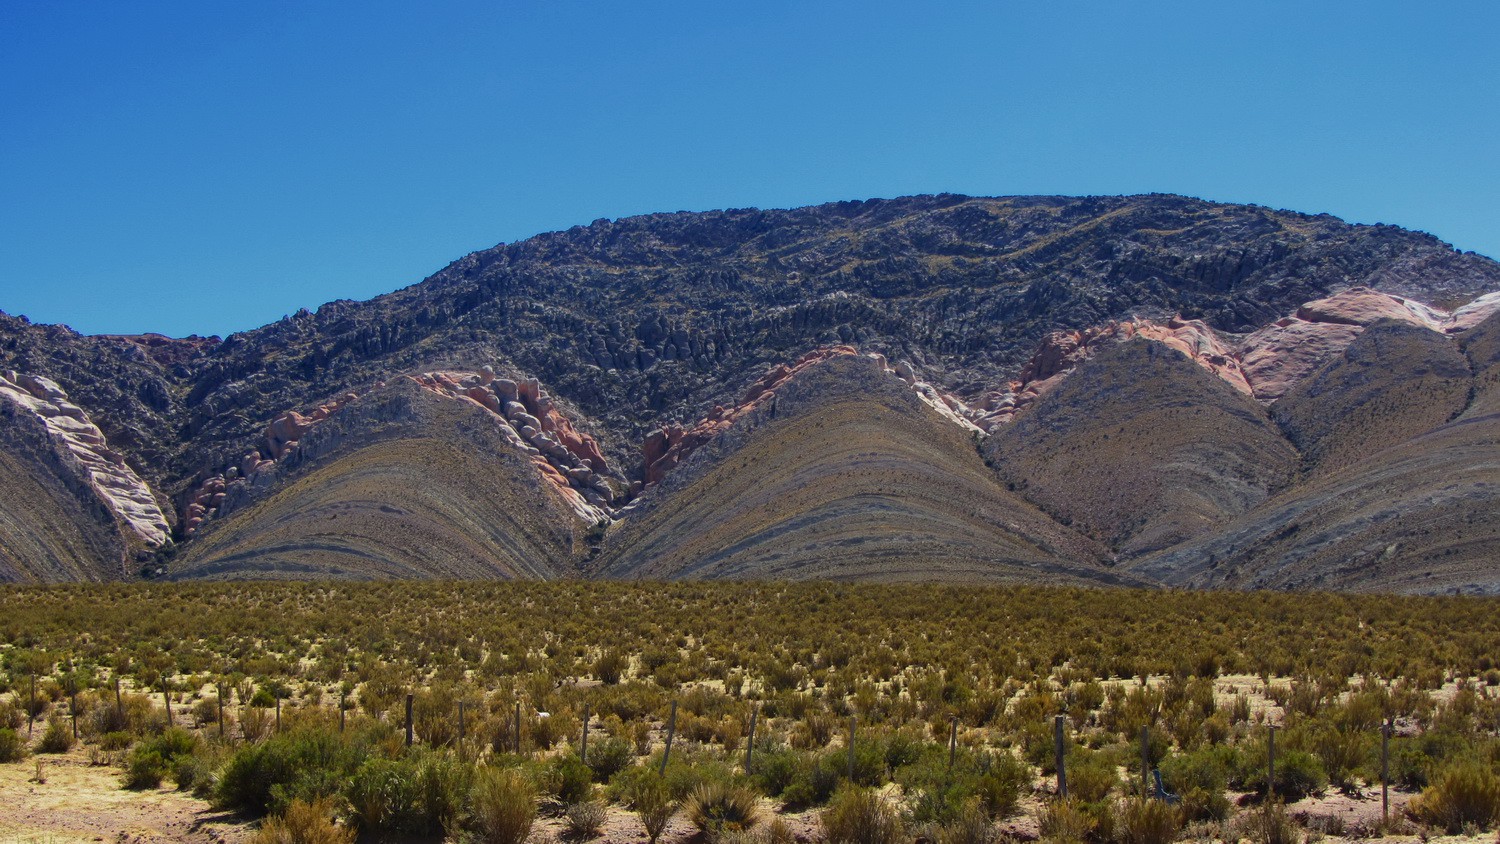 Landscape on the Ruta 9 / 40 between Abra Pampa and La Quiaca